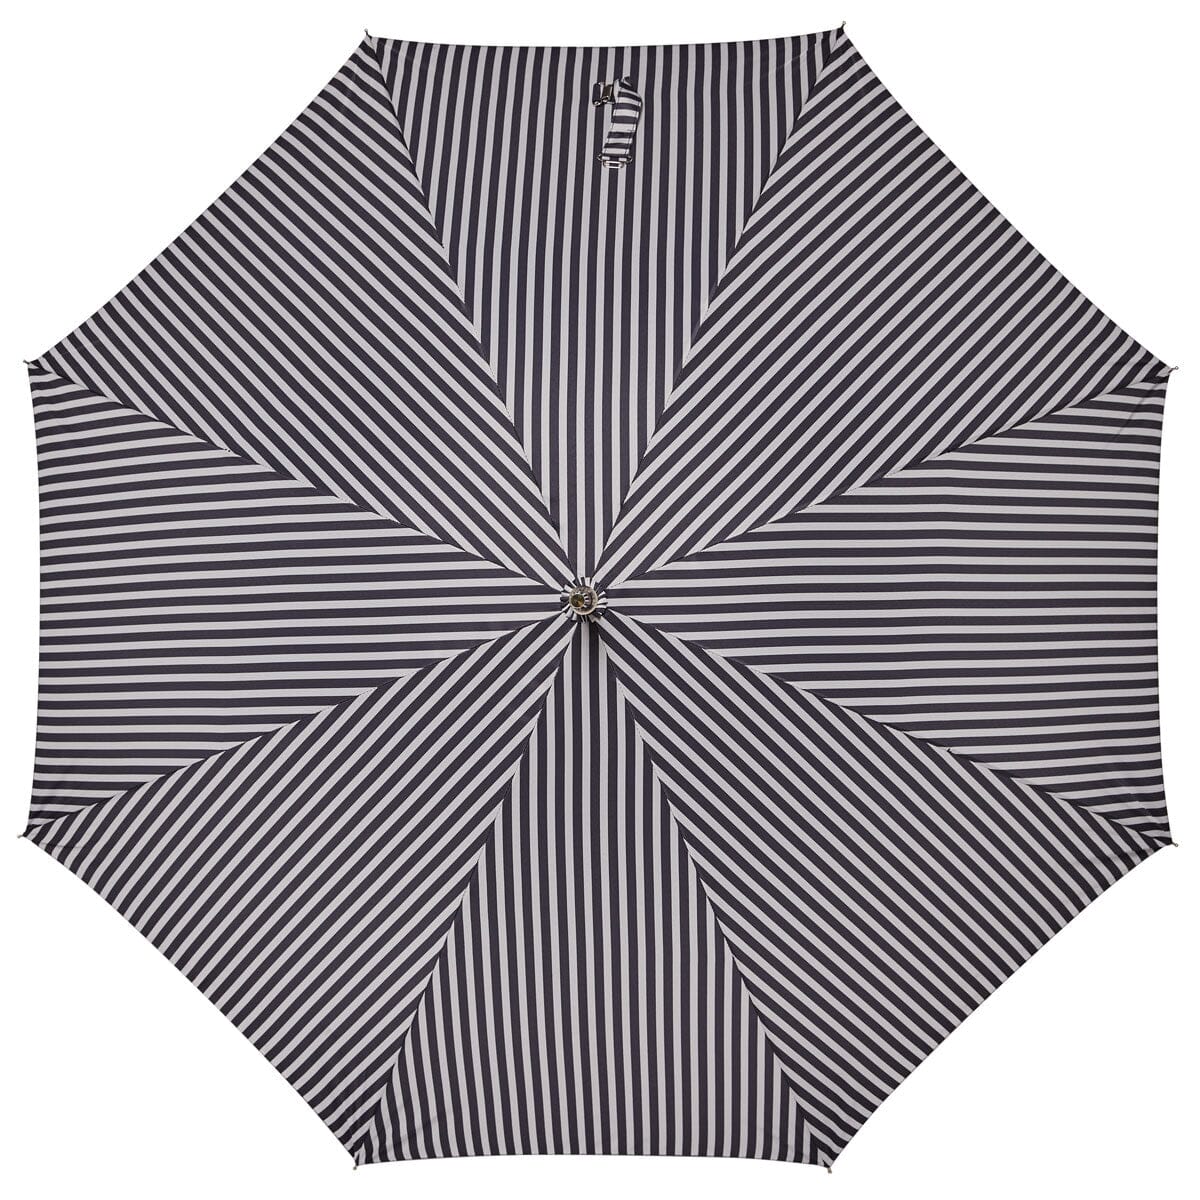 The Rain Umbrella - Lauren's Navy Stripe Rain Umbrella Business & Pleasure Co 